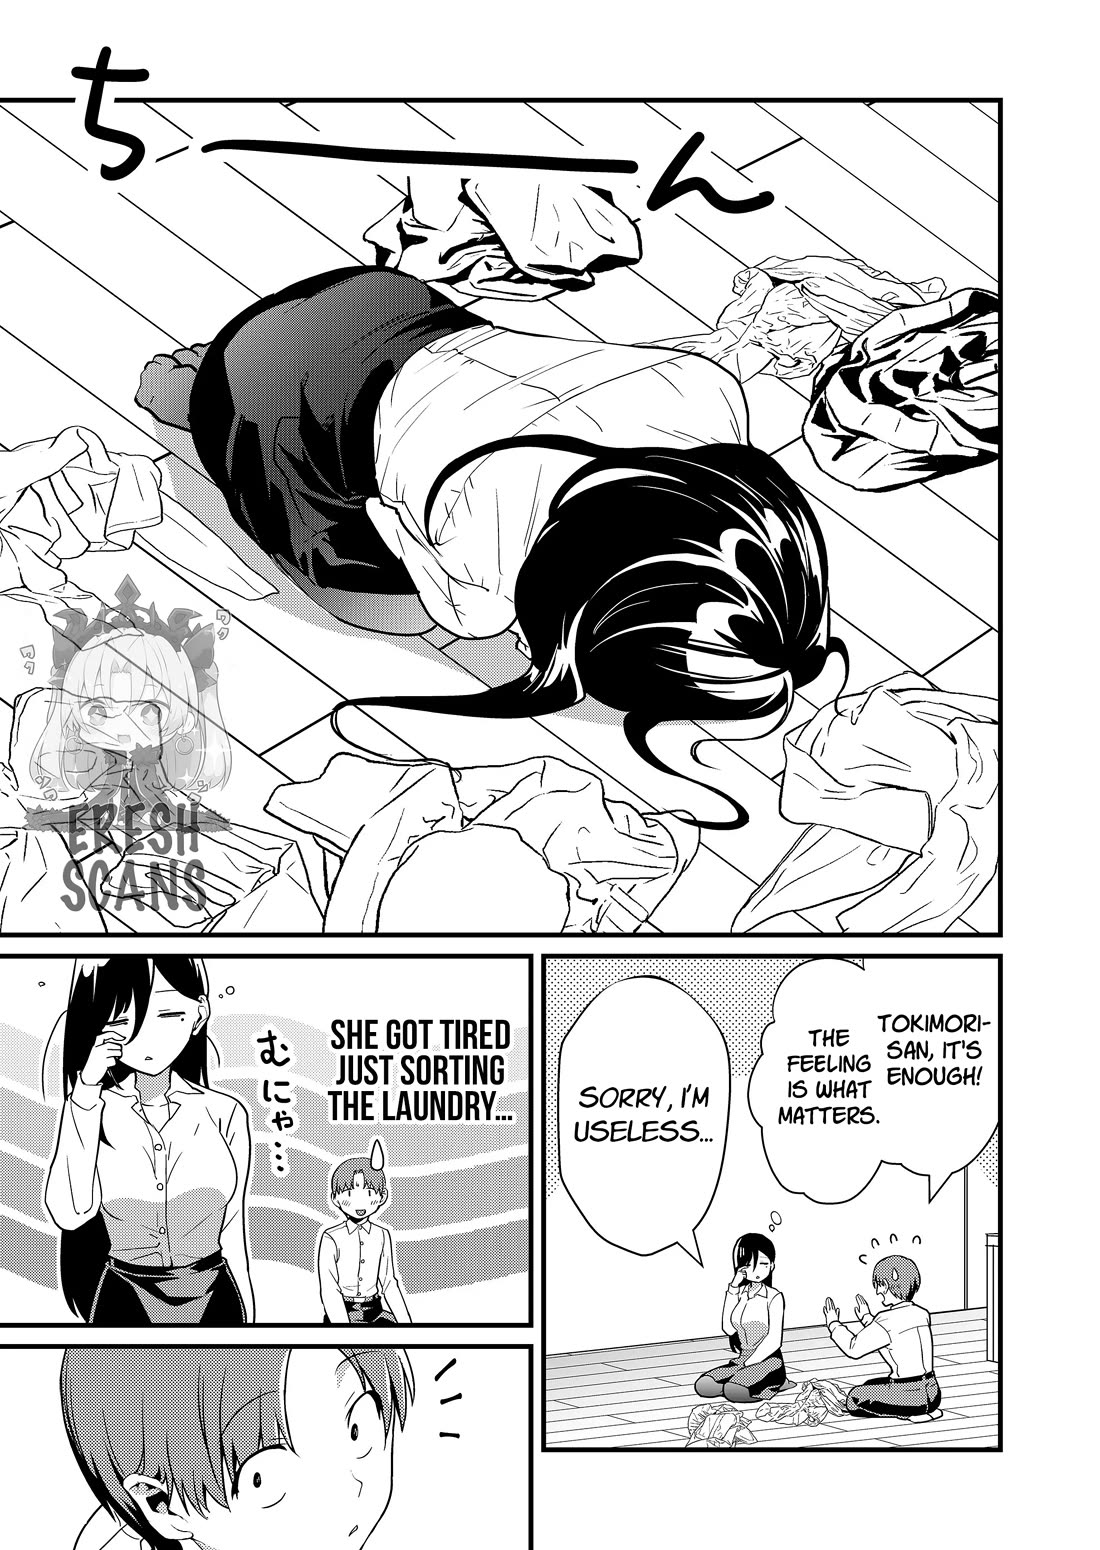 Tokimori-san Is Completely Defenseless!! - chapter 36 - #4